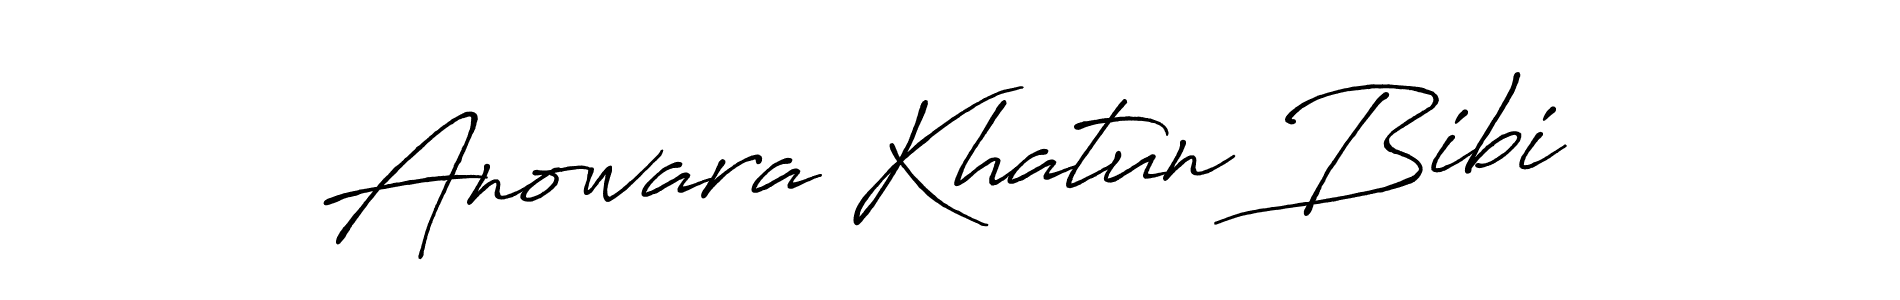 How to Draw Anowara Khatun Bibi signature style? Antro_Vectra_Bolder is a latest design signature styles for name Anowara Khatun Bibi. Anowara Khatun Bibi signature style 7 images and pictures png